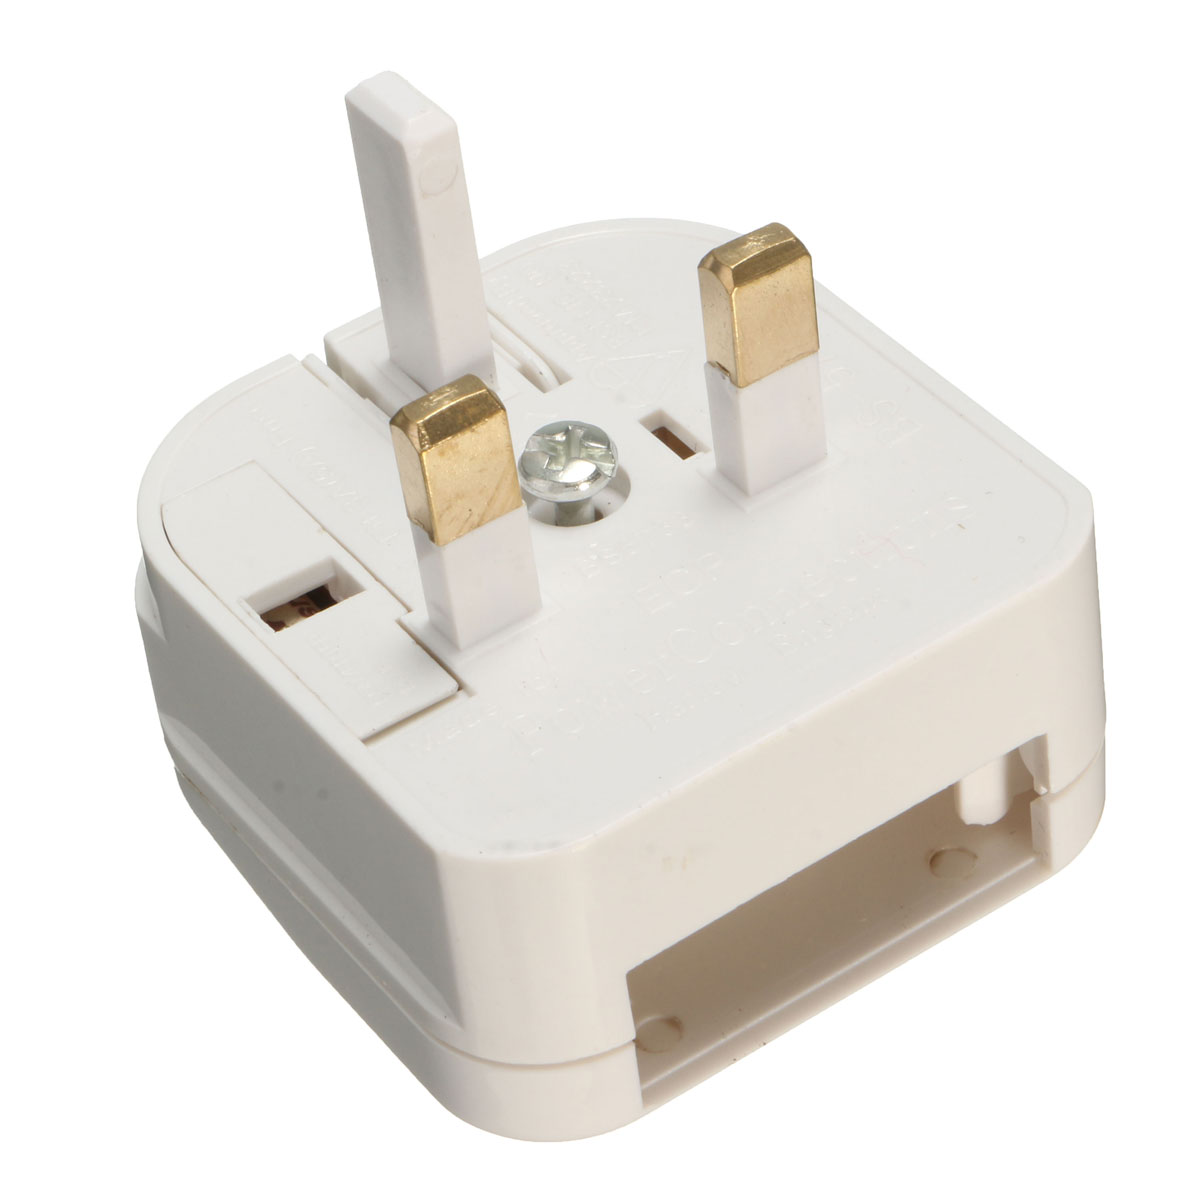 UK-Converter-Adaptor-Plug-Travel-Power-Connections-White-1054517